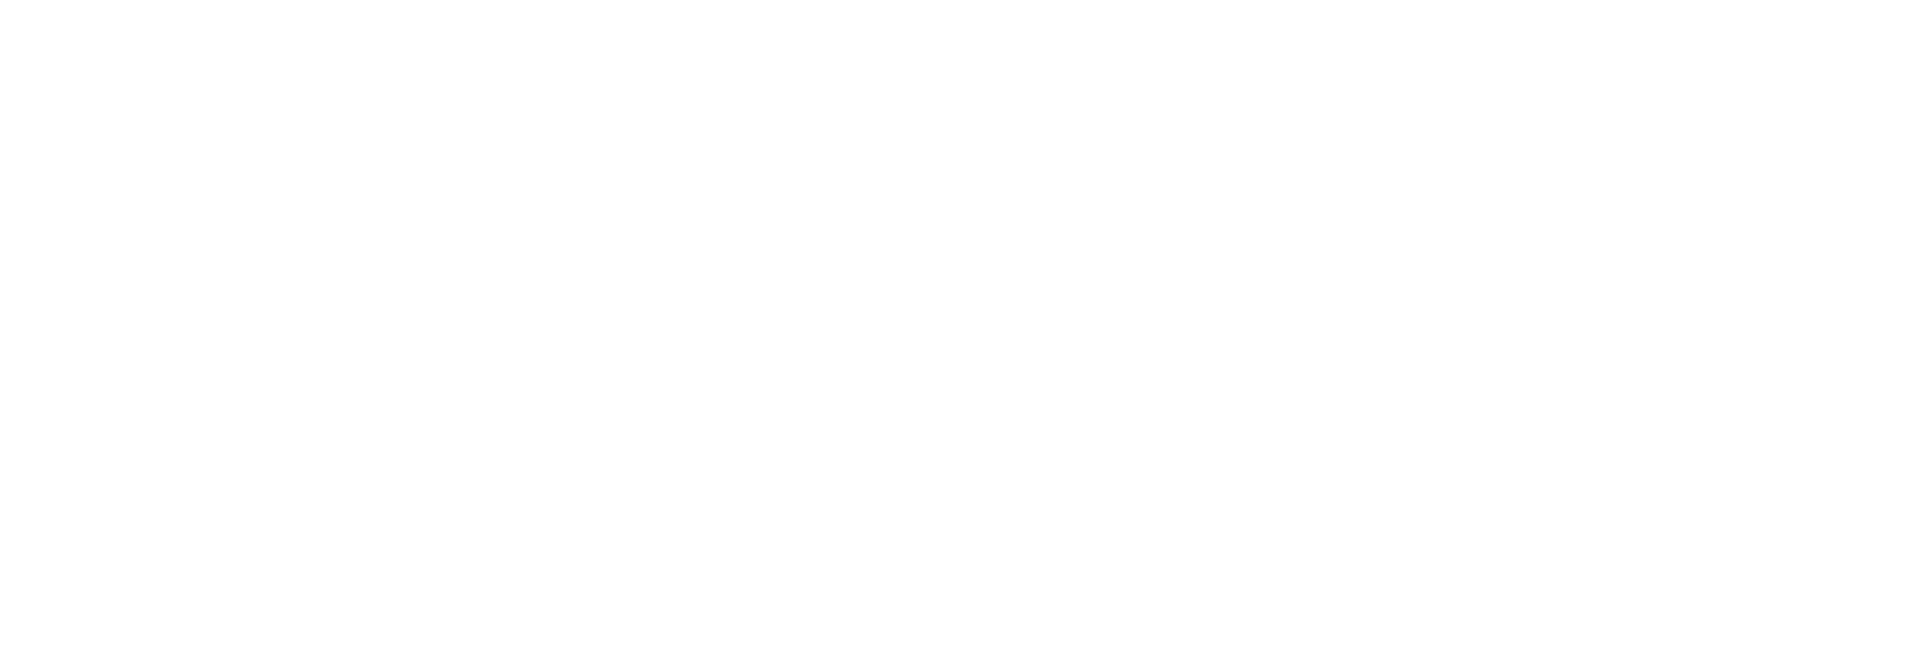 Vespa Logo Header